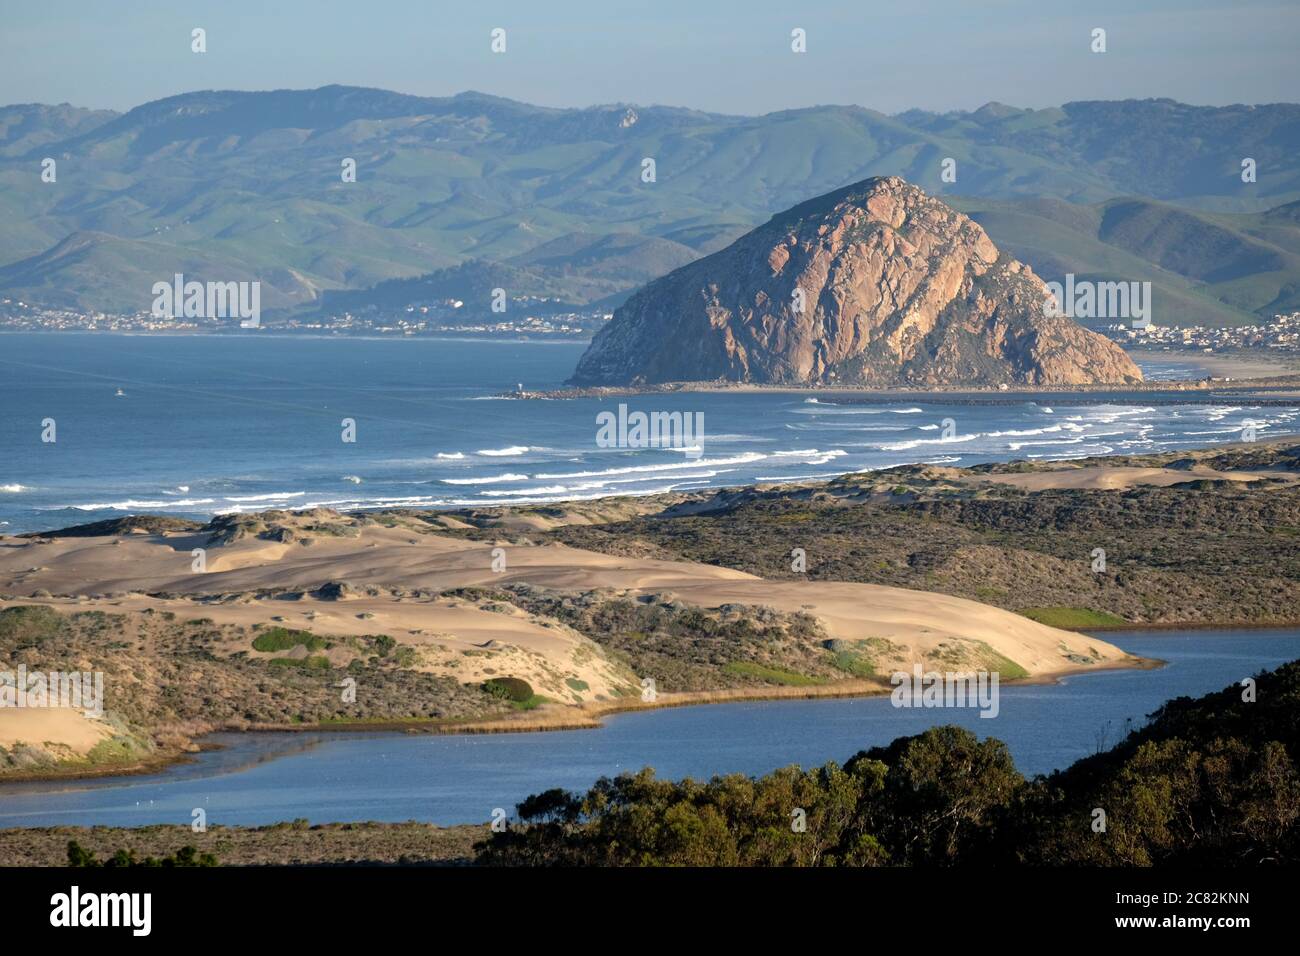 View of Morro Rock and Bay along the Central California Coastline Stock Photo